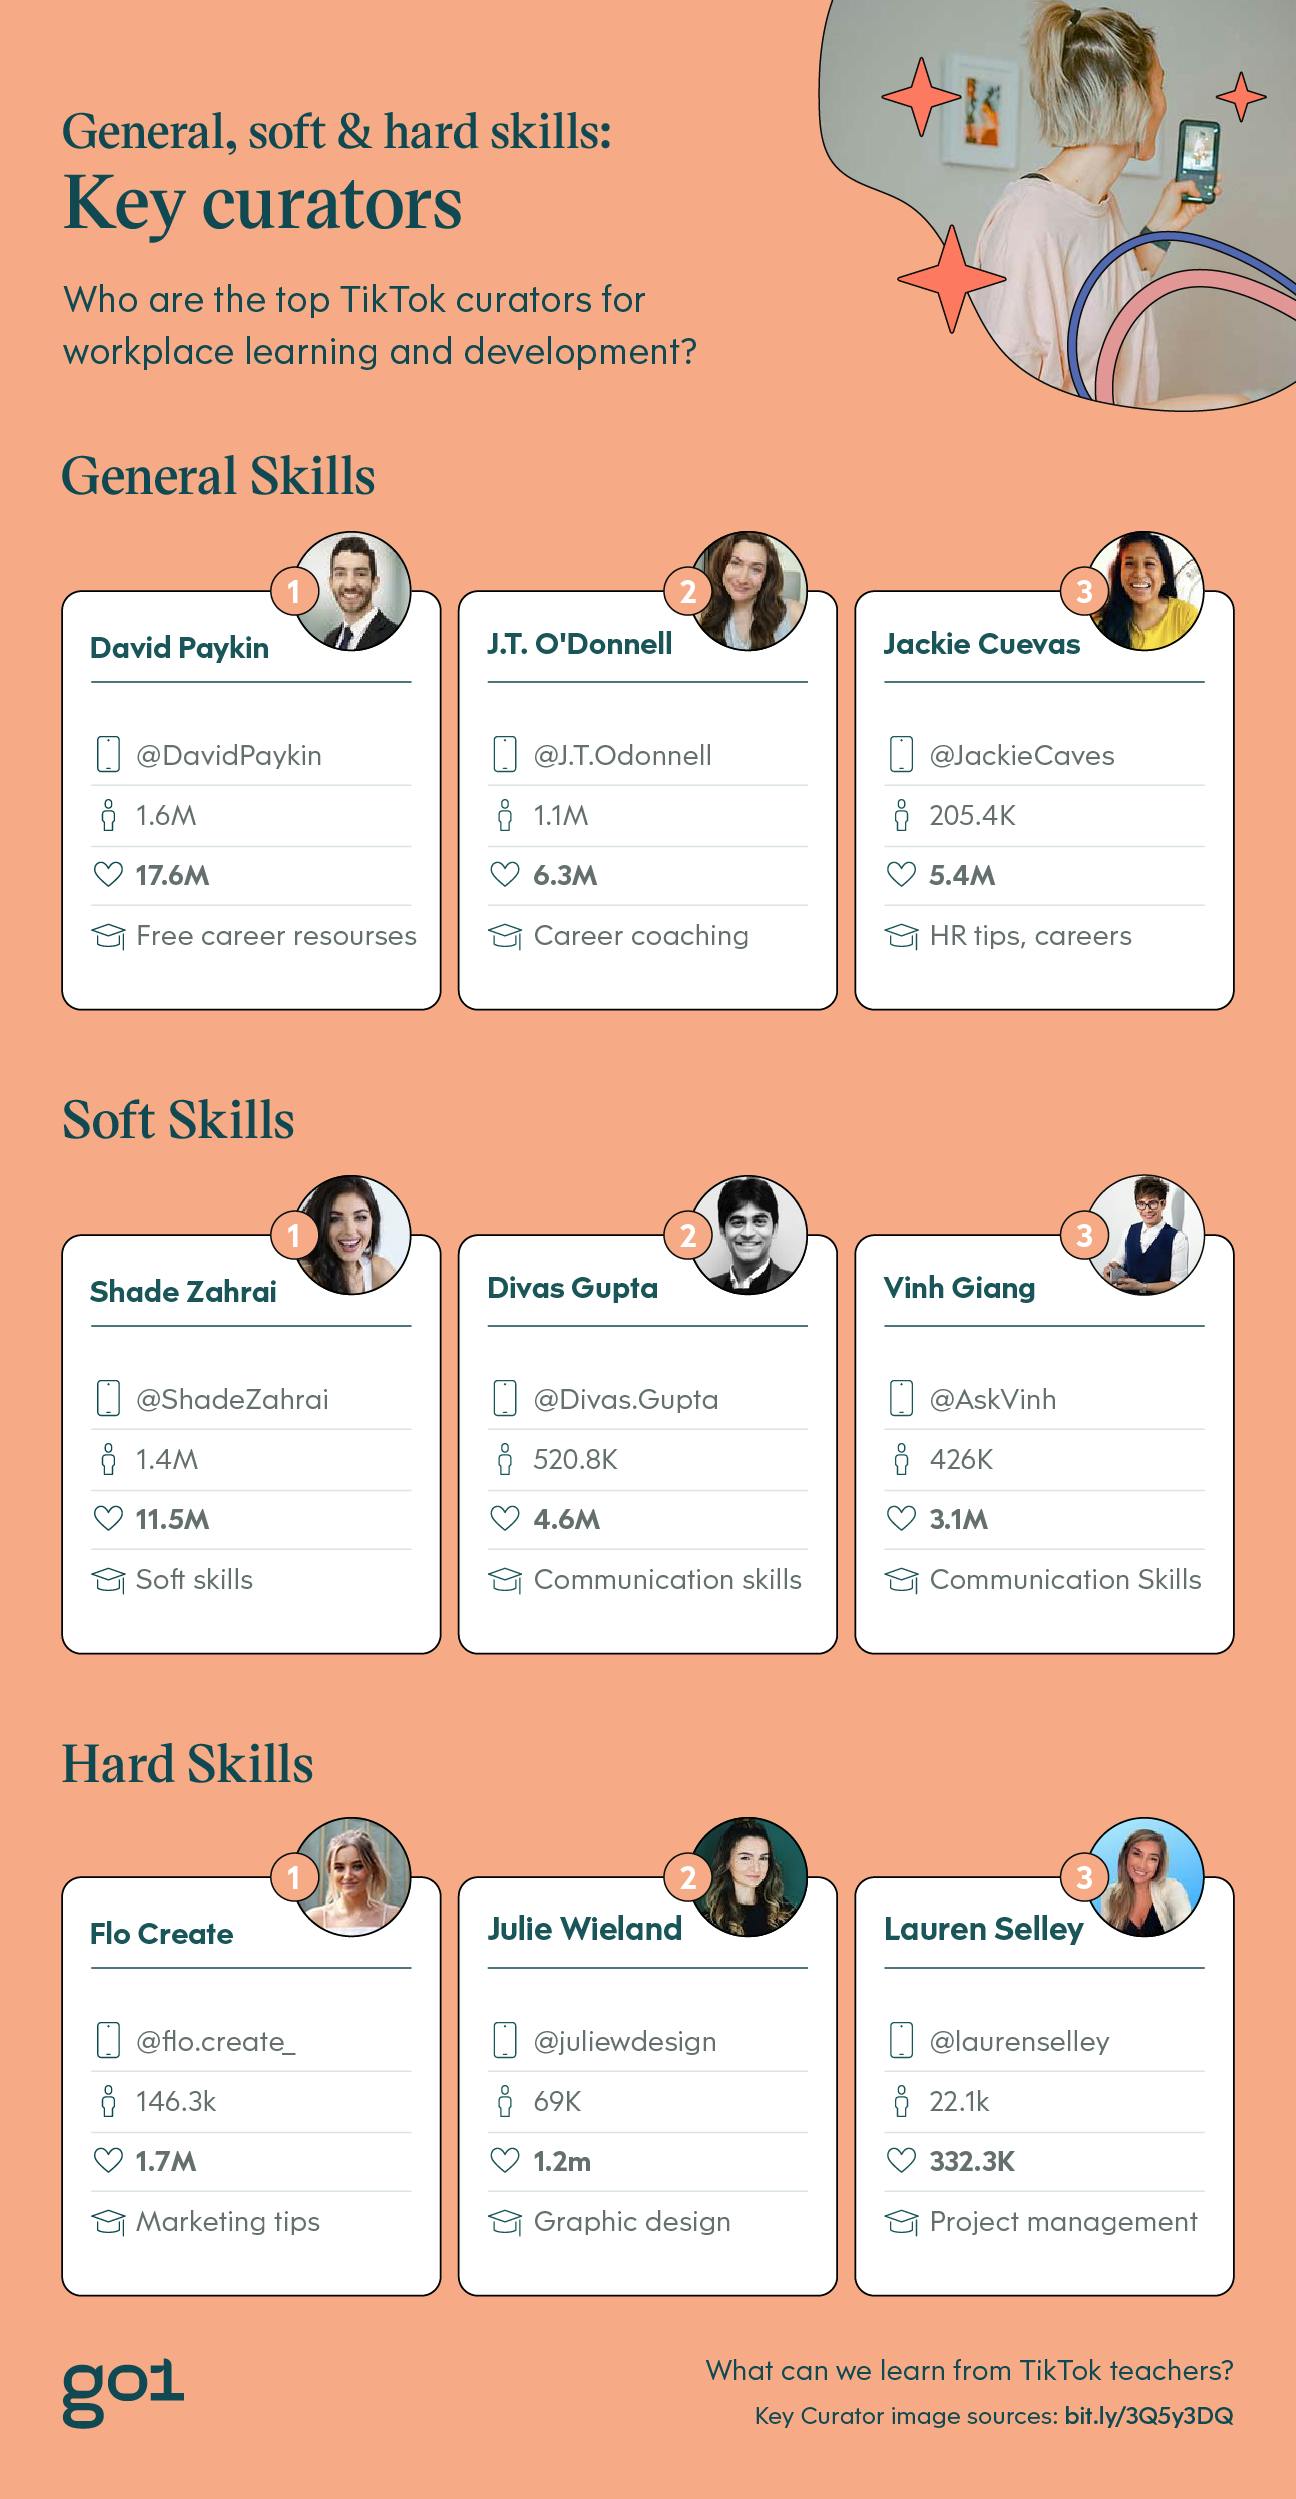 An image displaying key TikTok creators for general skills, hard skills, and soft skills.